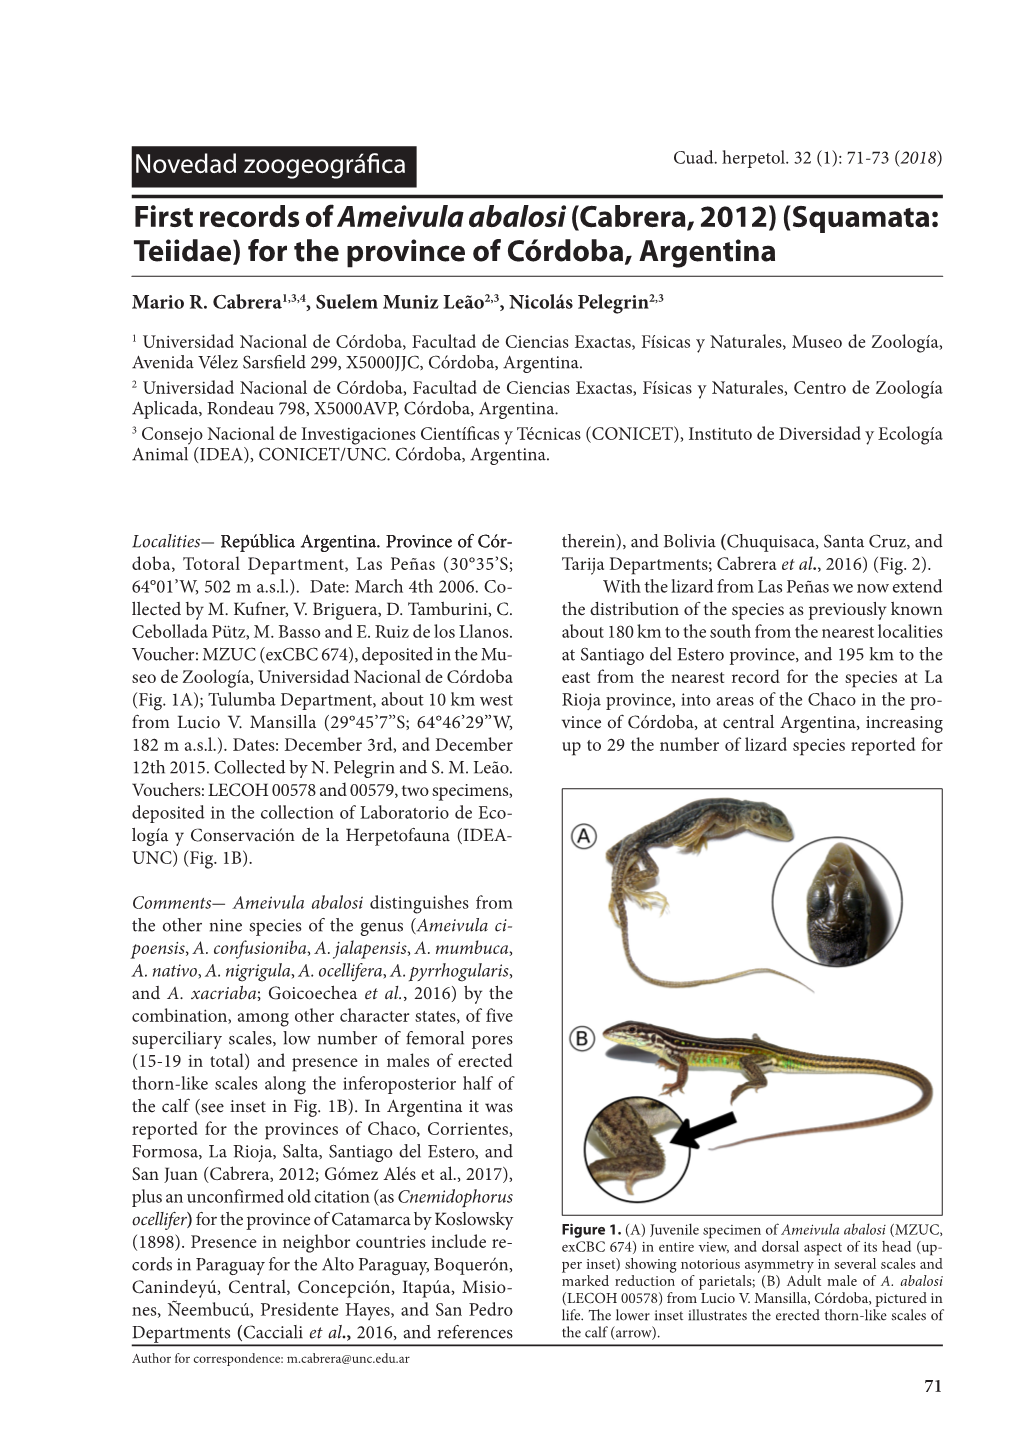 First Records of Ameivula Abalosi(Cabrera, 2012) (Squamata